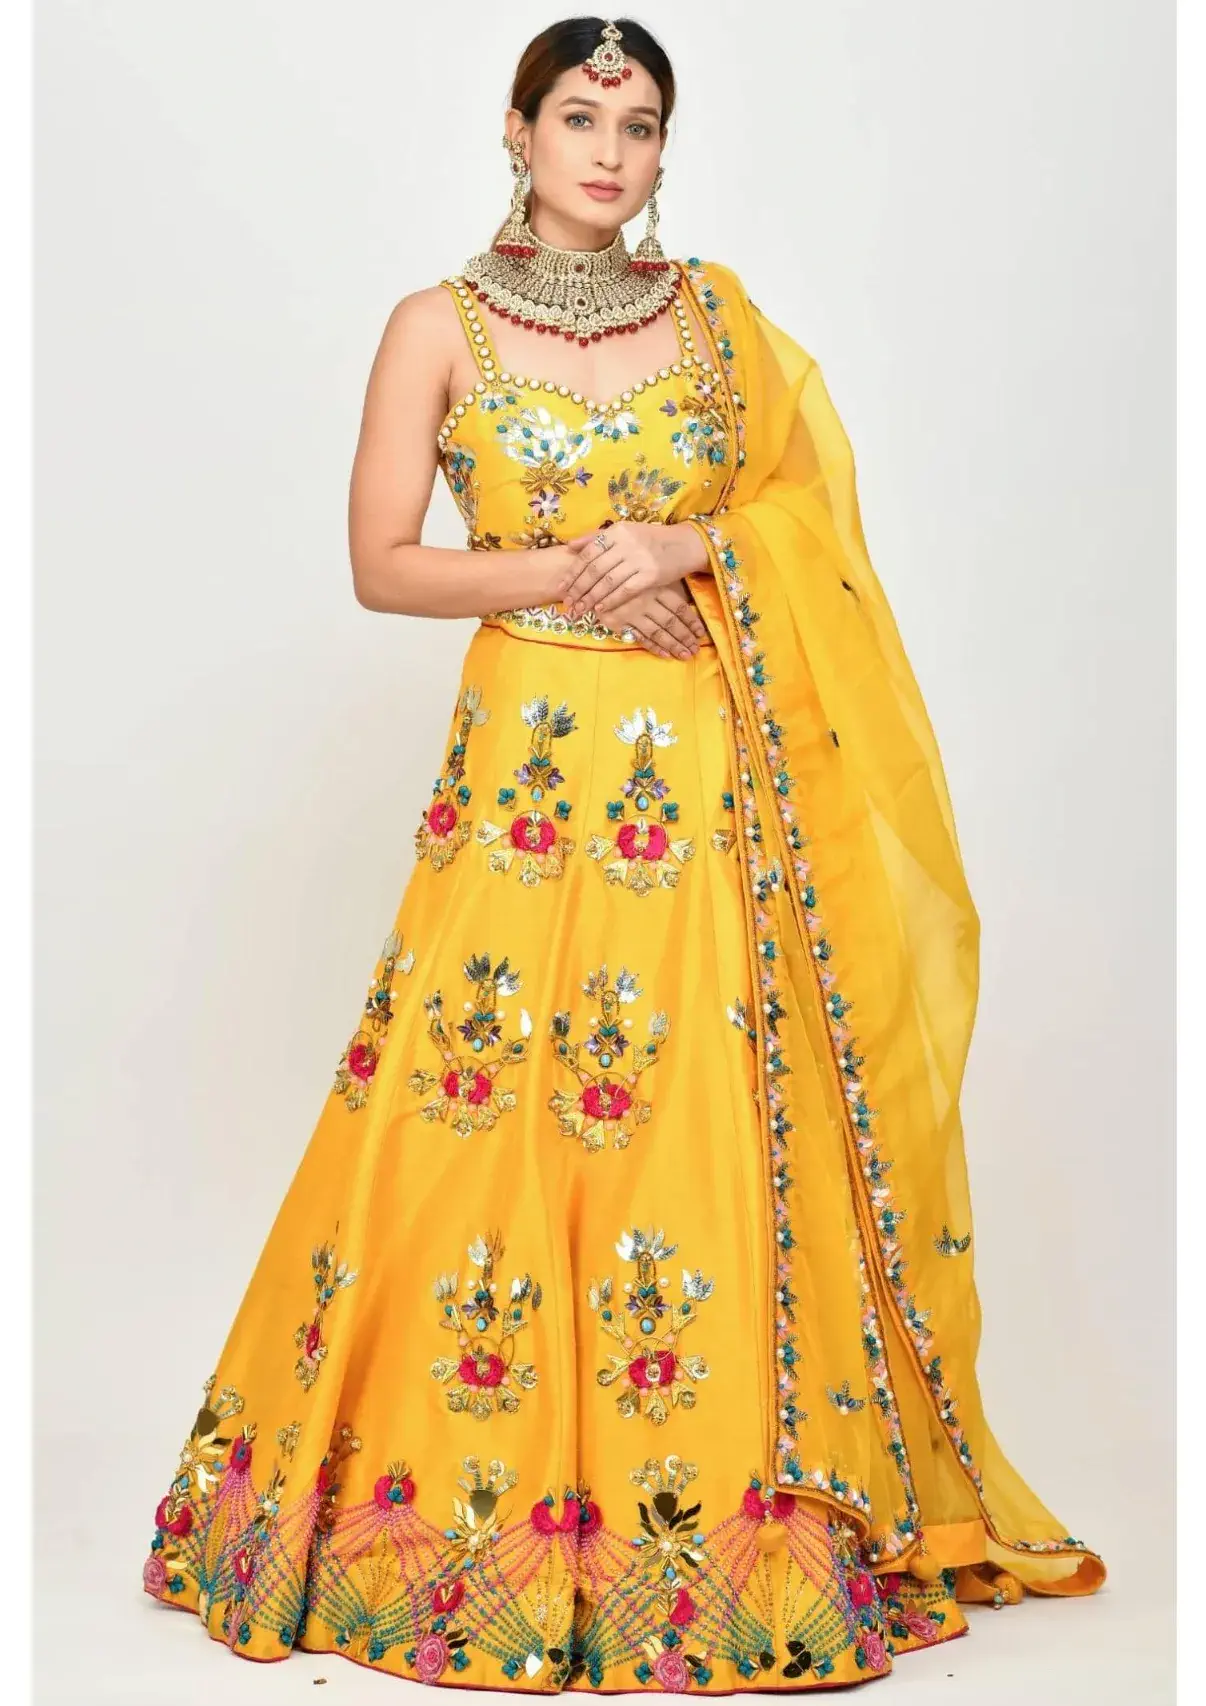 Discover 158+ groom dress for haldi function latest